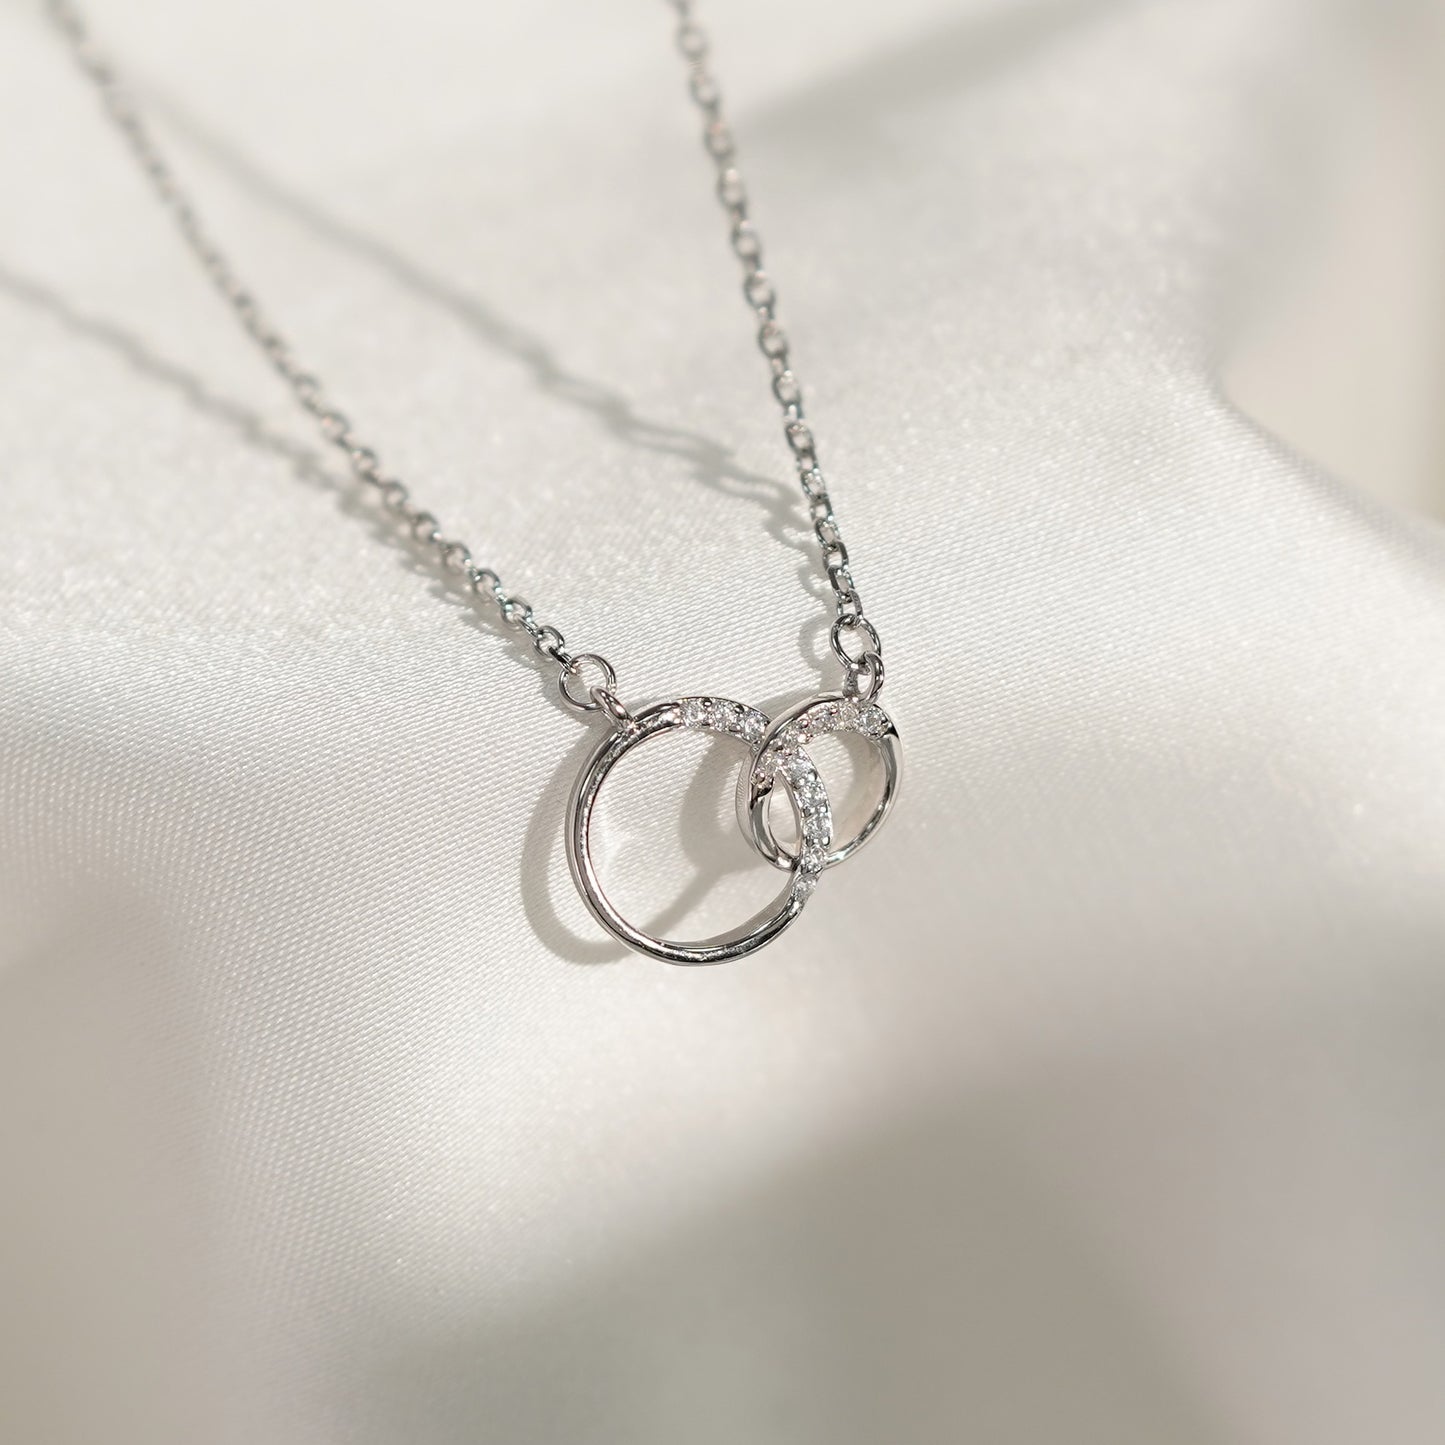 S925 Sterling Silver Niche Design Circle Necklace